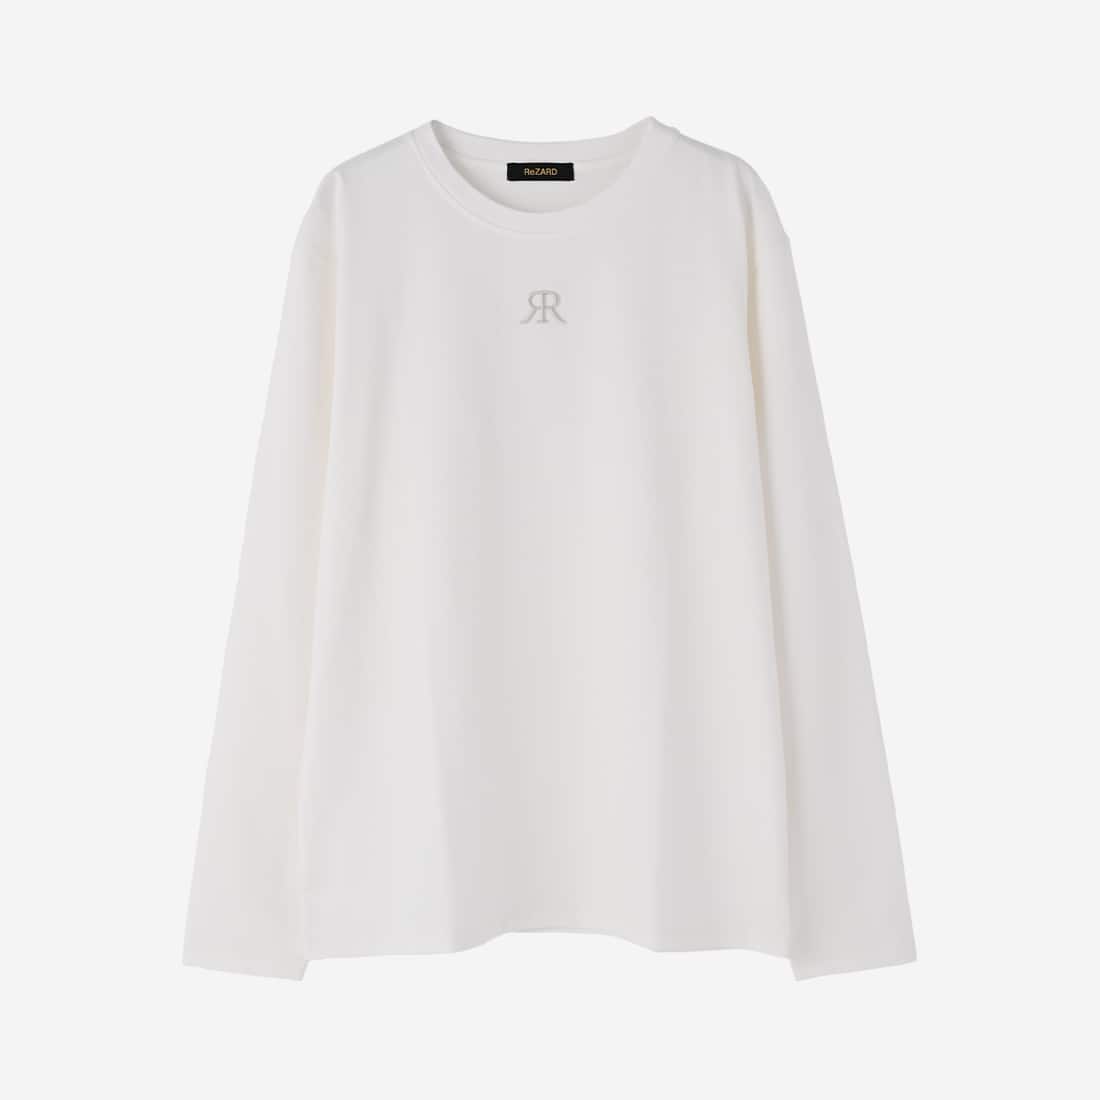 【ReZARD】Double R Long Sleeve T-shirts(WHITE)